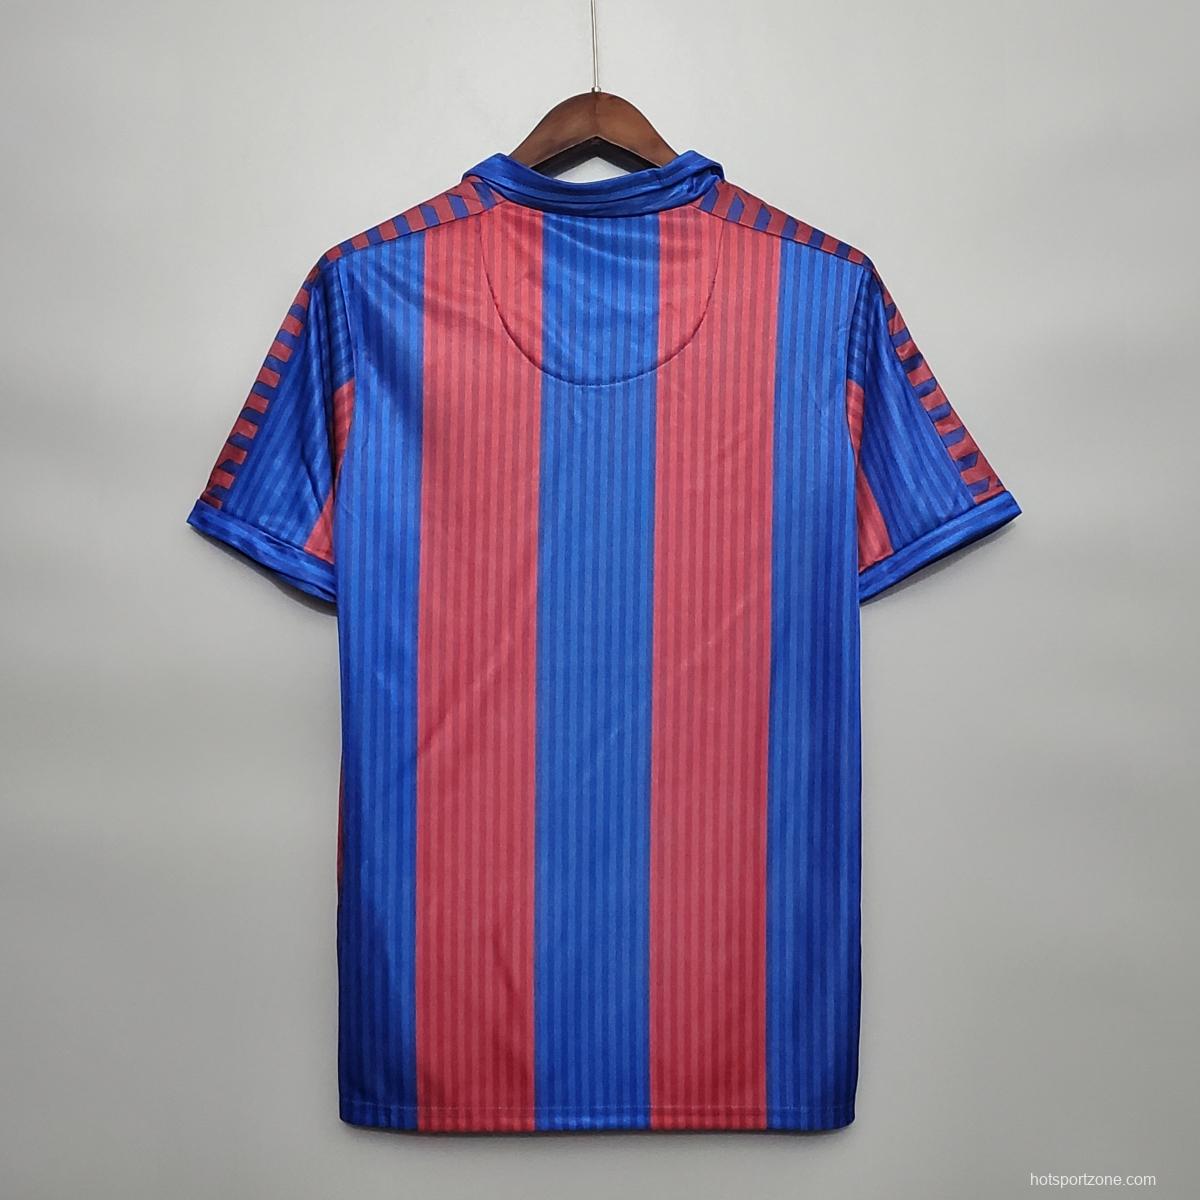 Retro Barcelona 90/91 home Soccer Jersey